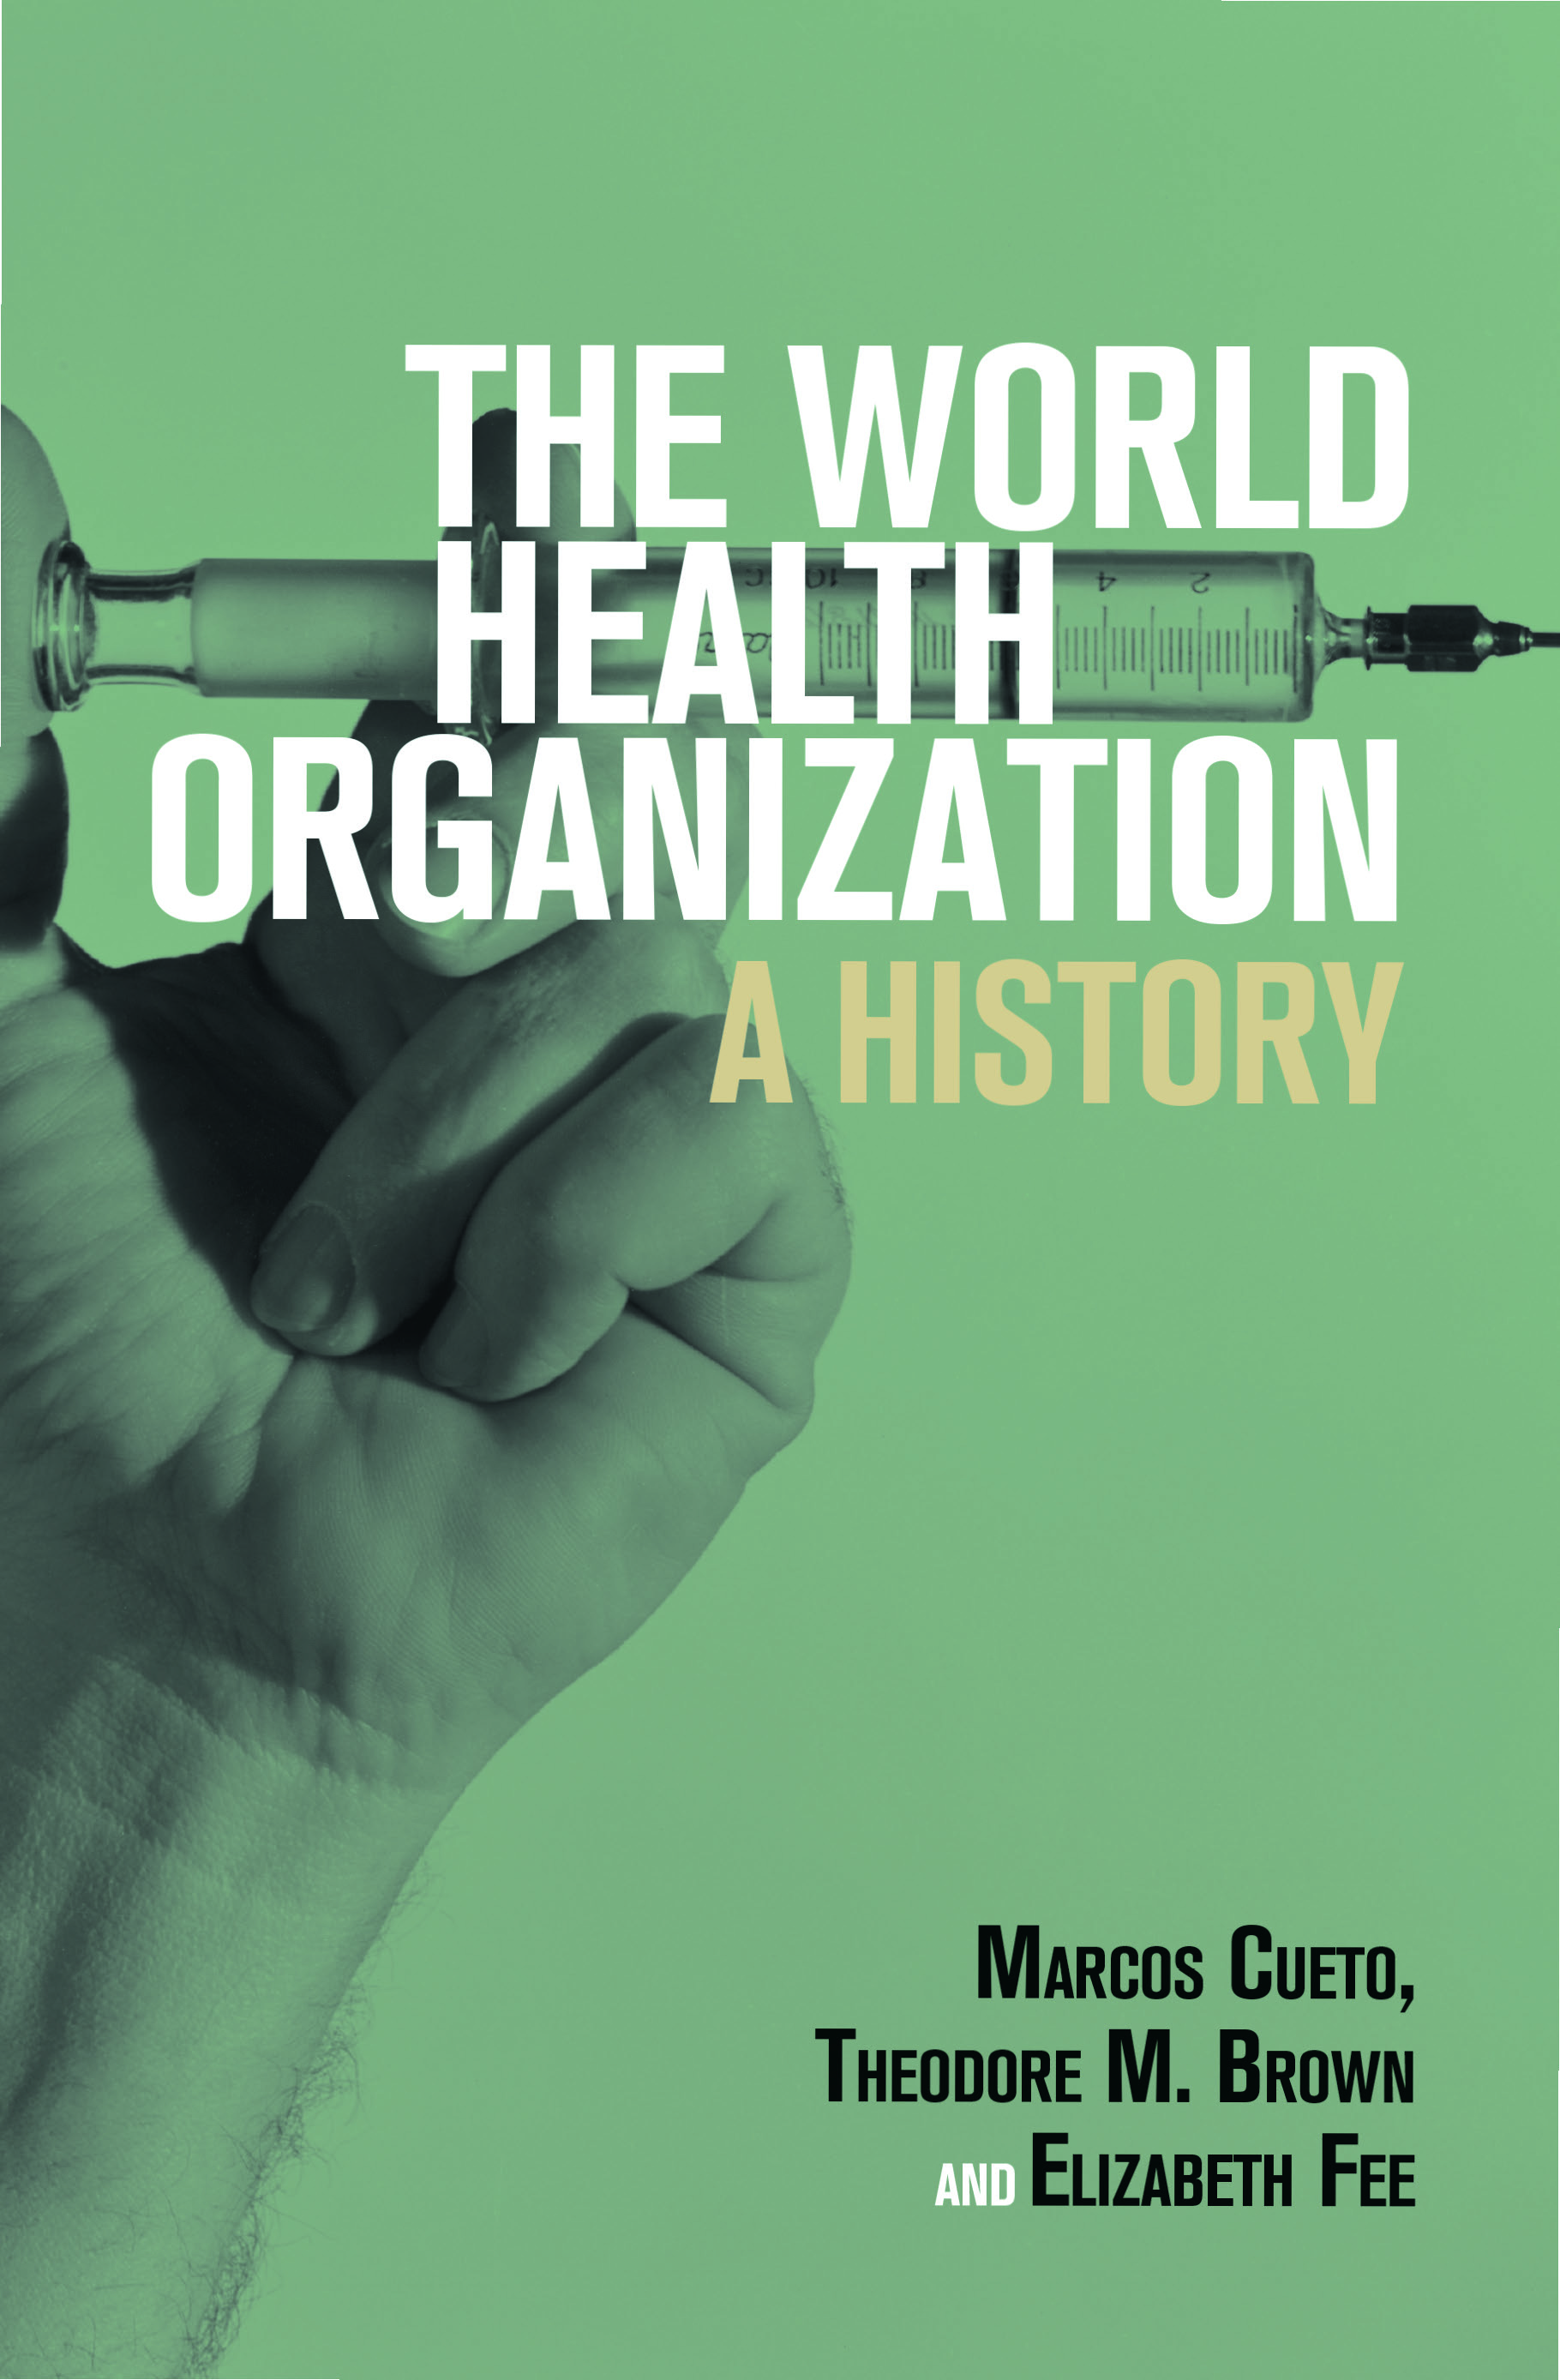 The World Health Organization - A History